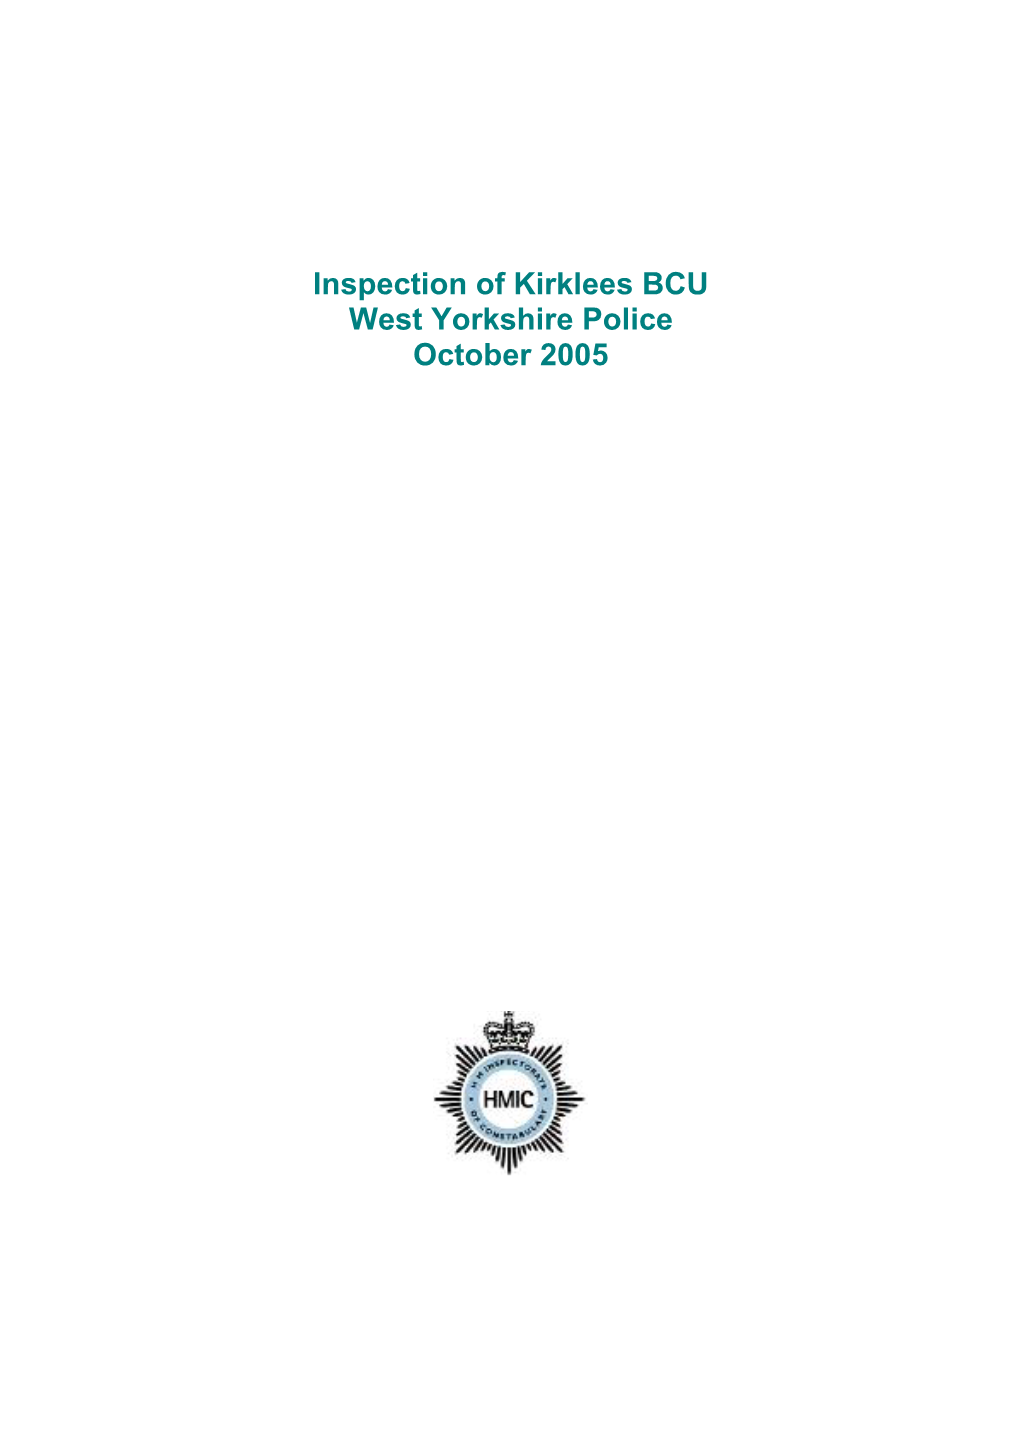 Inspection of Kirklees BCU West Yorkshire Police October 2005